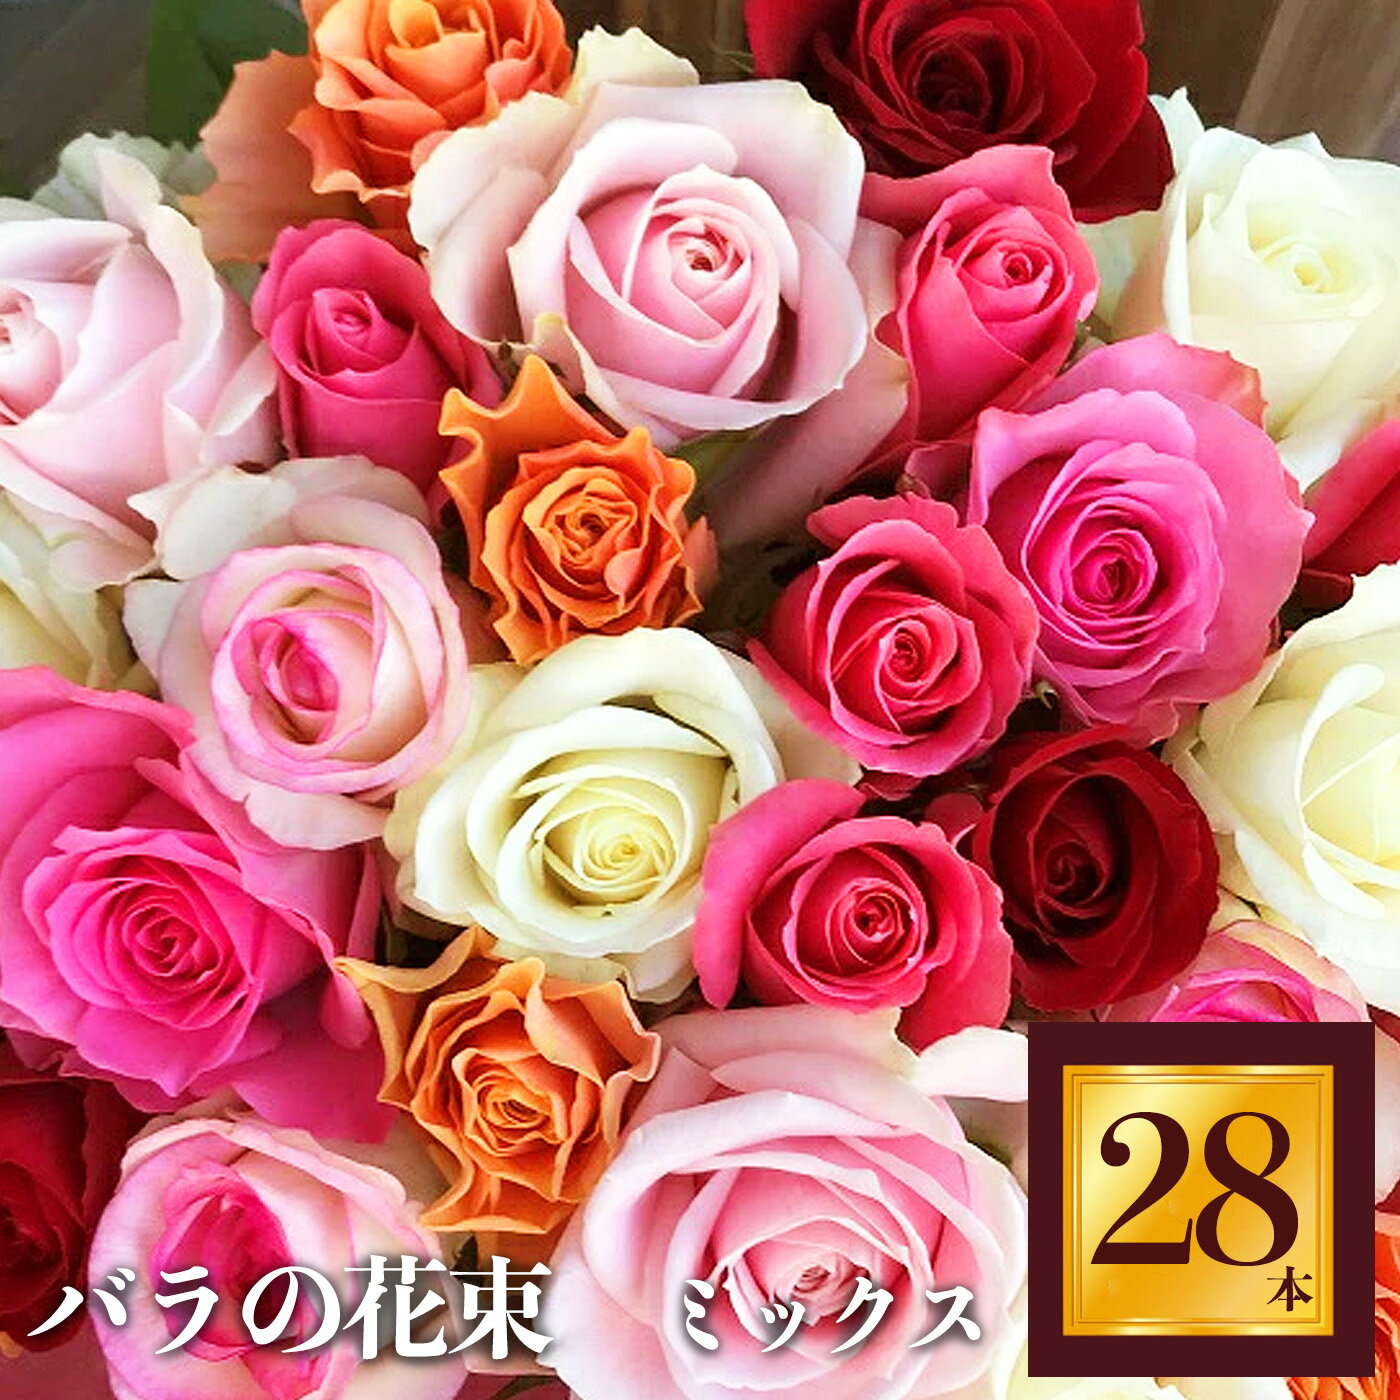 Heguri Rose バラの花束（28本） ローズ フラワー 新鮮 高品質 綺麗 平群のバラ 花束 平群ブランド 誕生日 記念日 お祝い